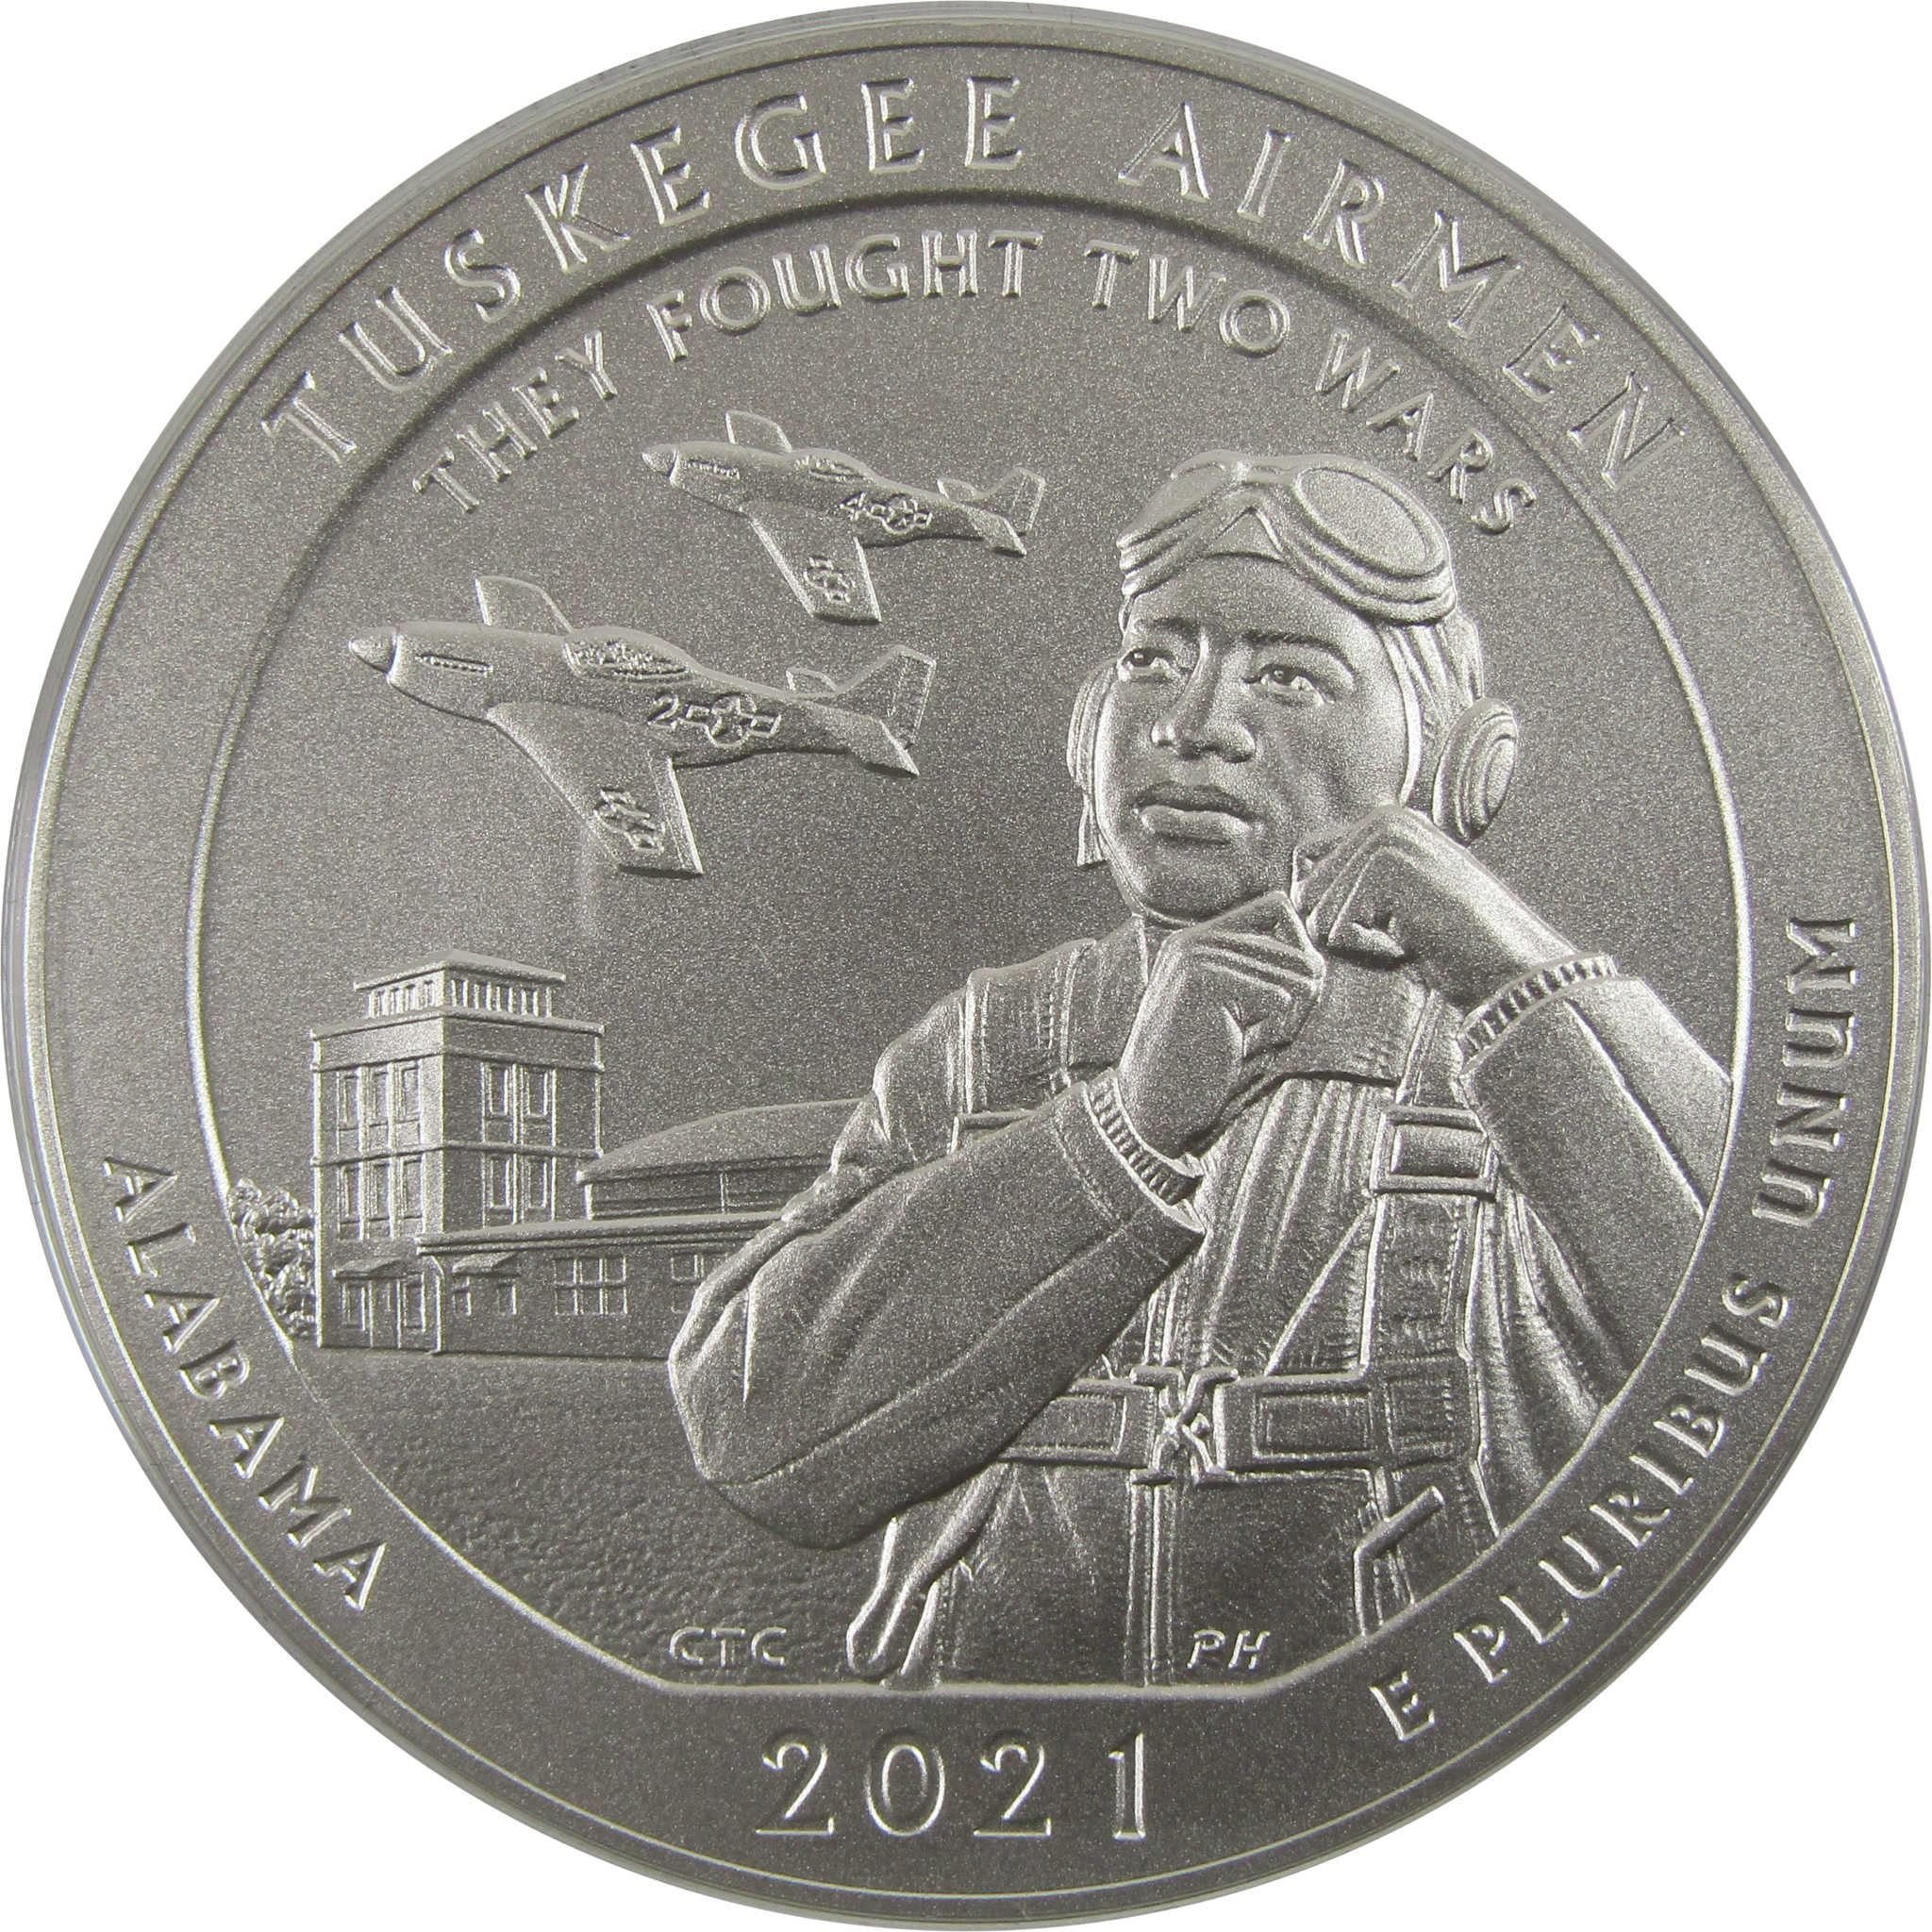 Tuskegee Airmen National Historic Site 2021 Quarter, 3-Coin Set - US Mint